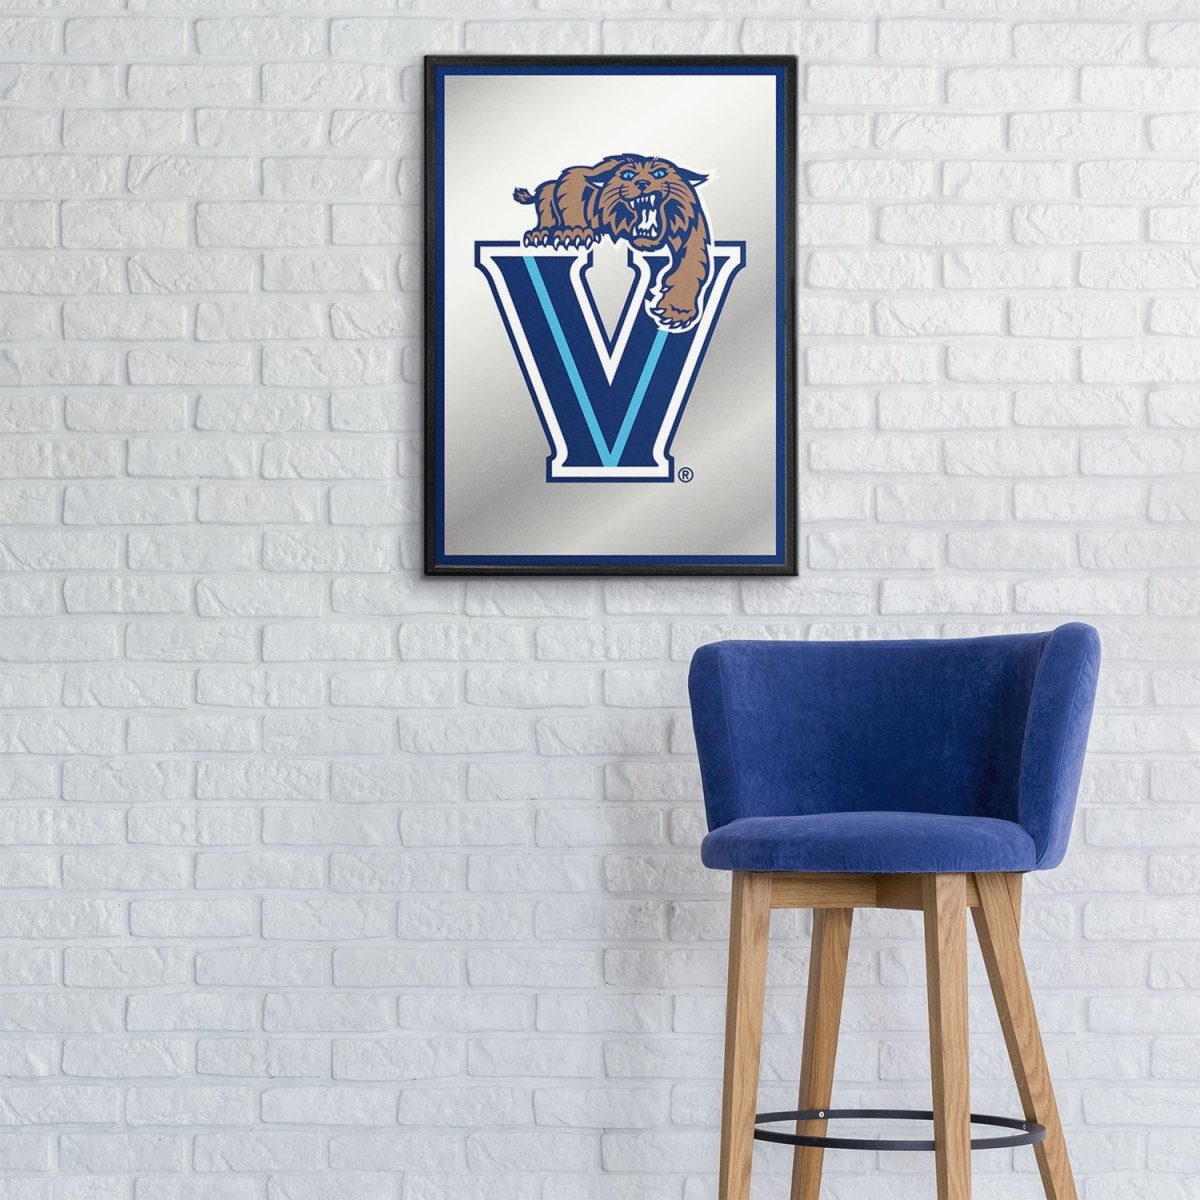 Villanova Cavaliers: Mascot - Framed Mirrored Wall Sign - The Fan-Brand